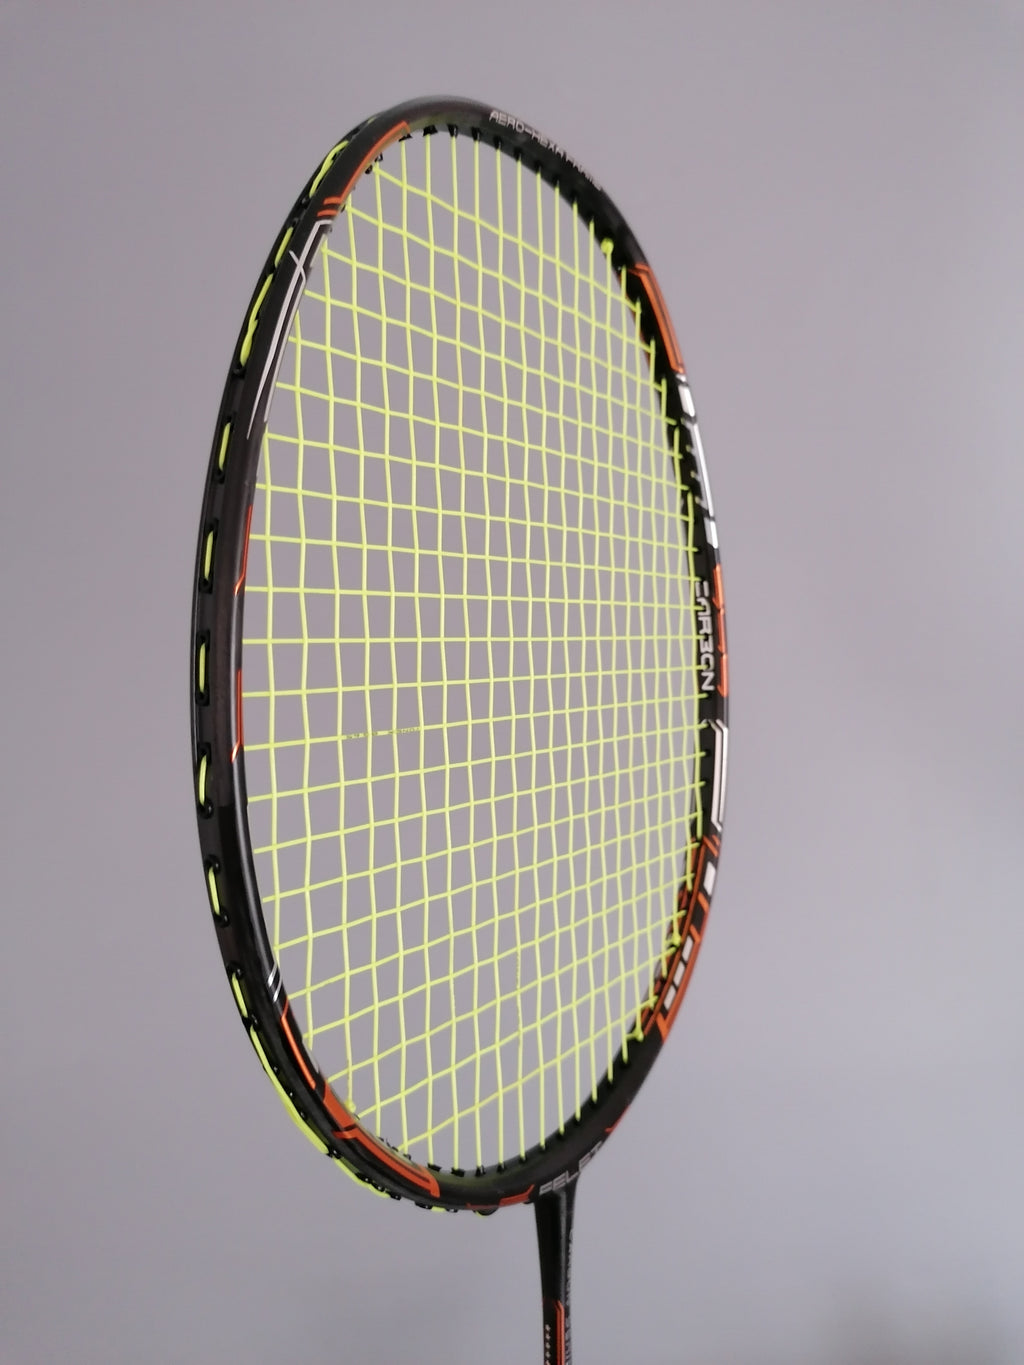 Felet Aero Carbon 4u g1 badminton racket - badminton racket review